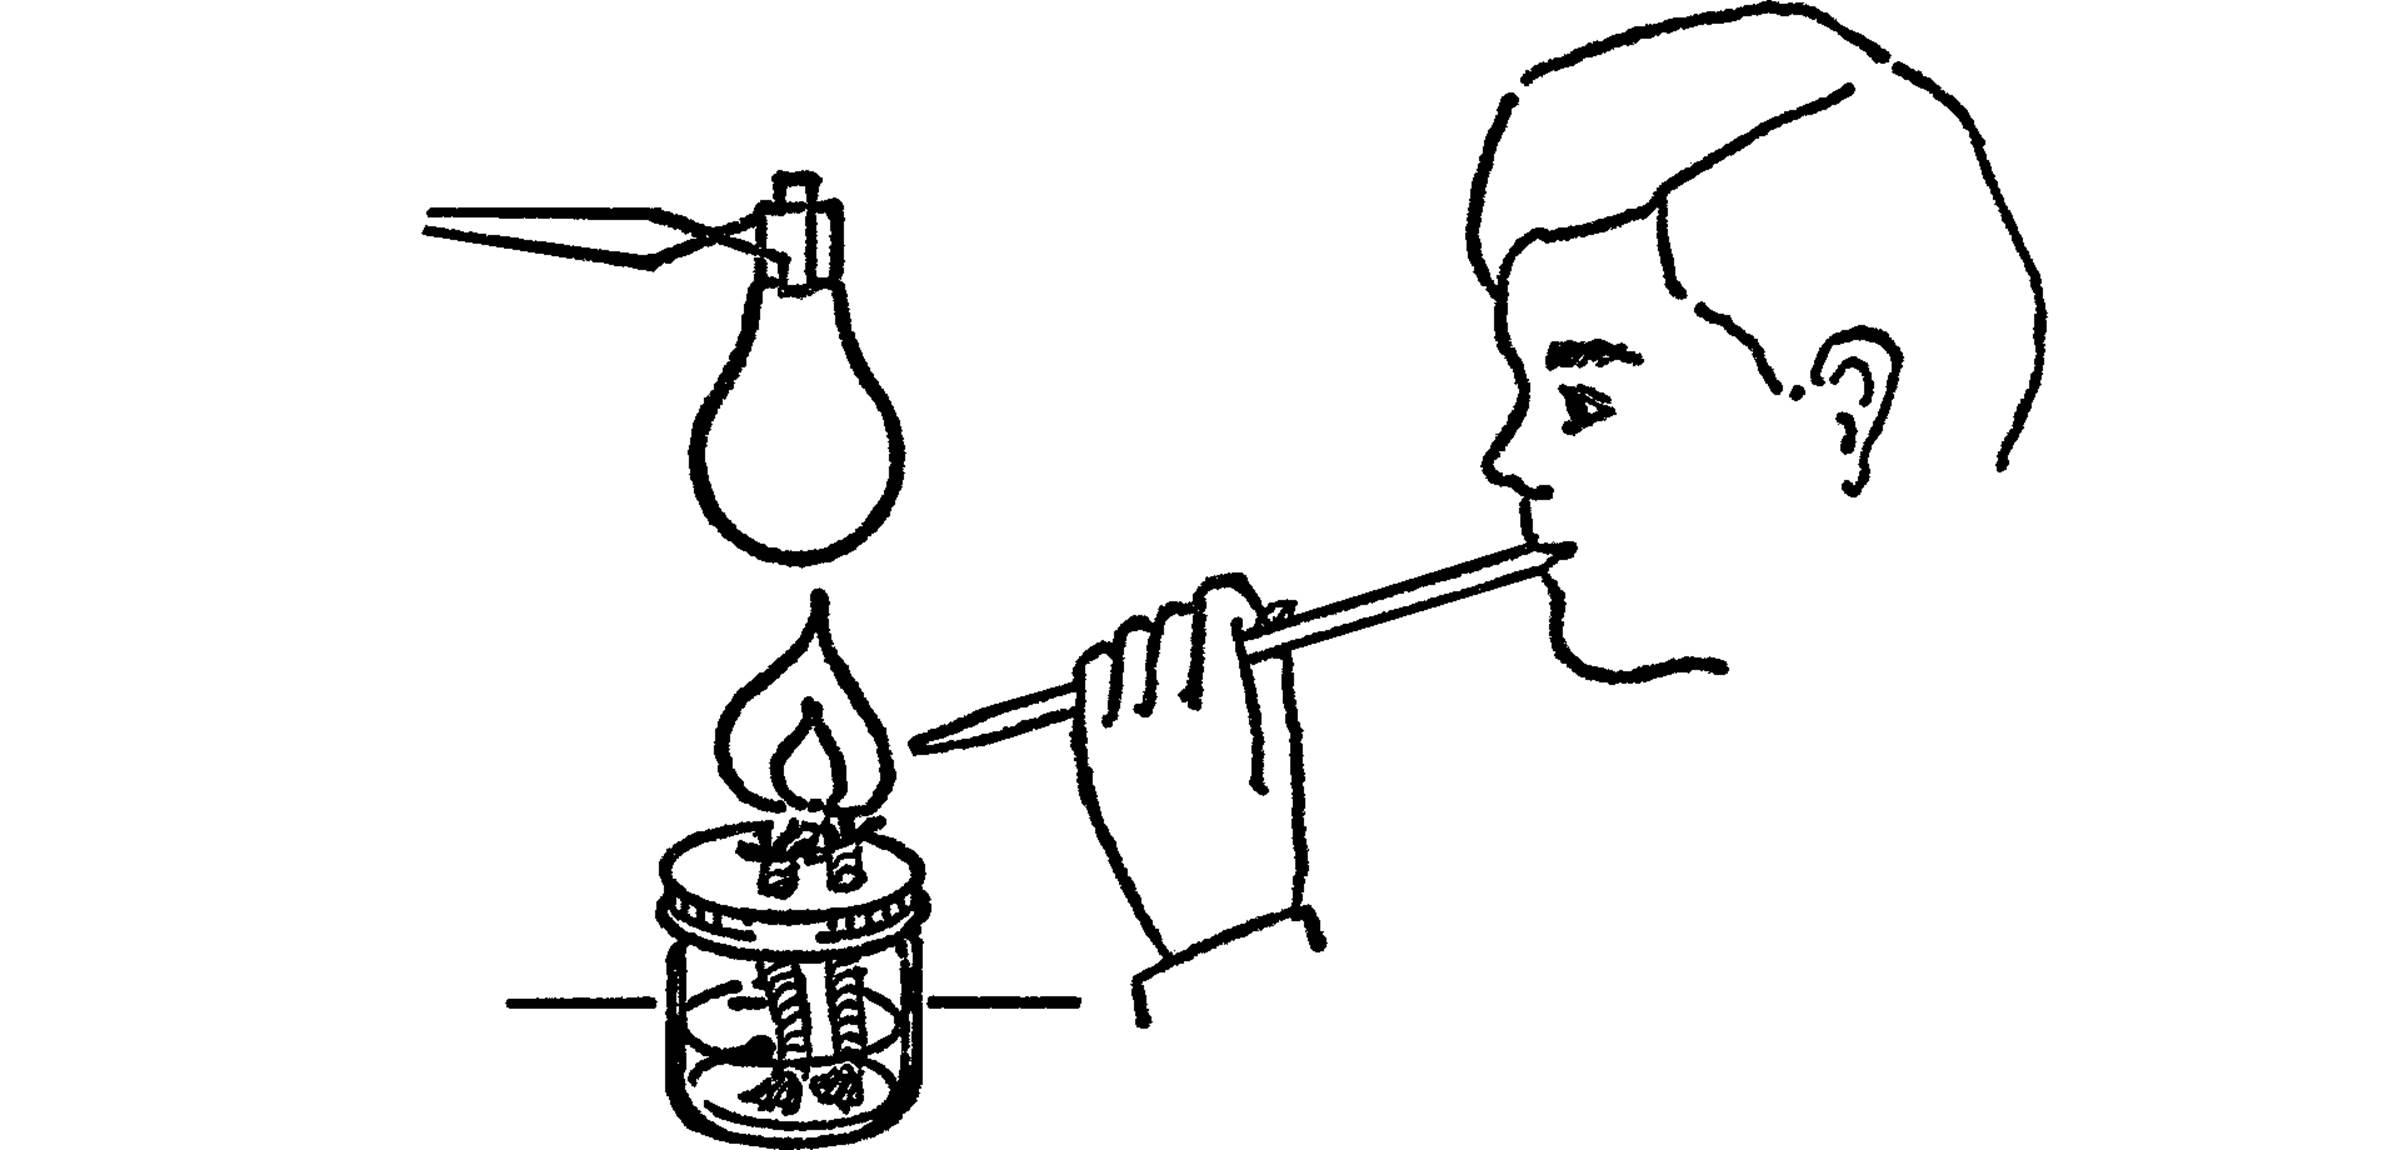 Blowtorch type alcohol burner.